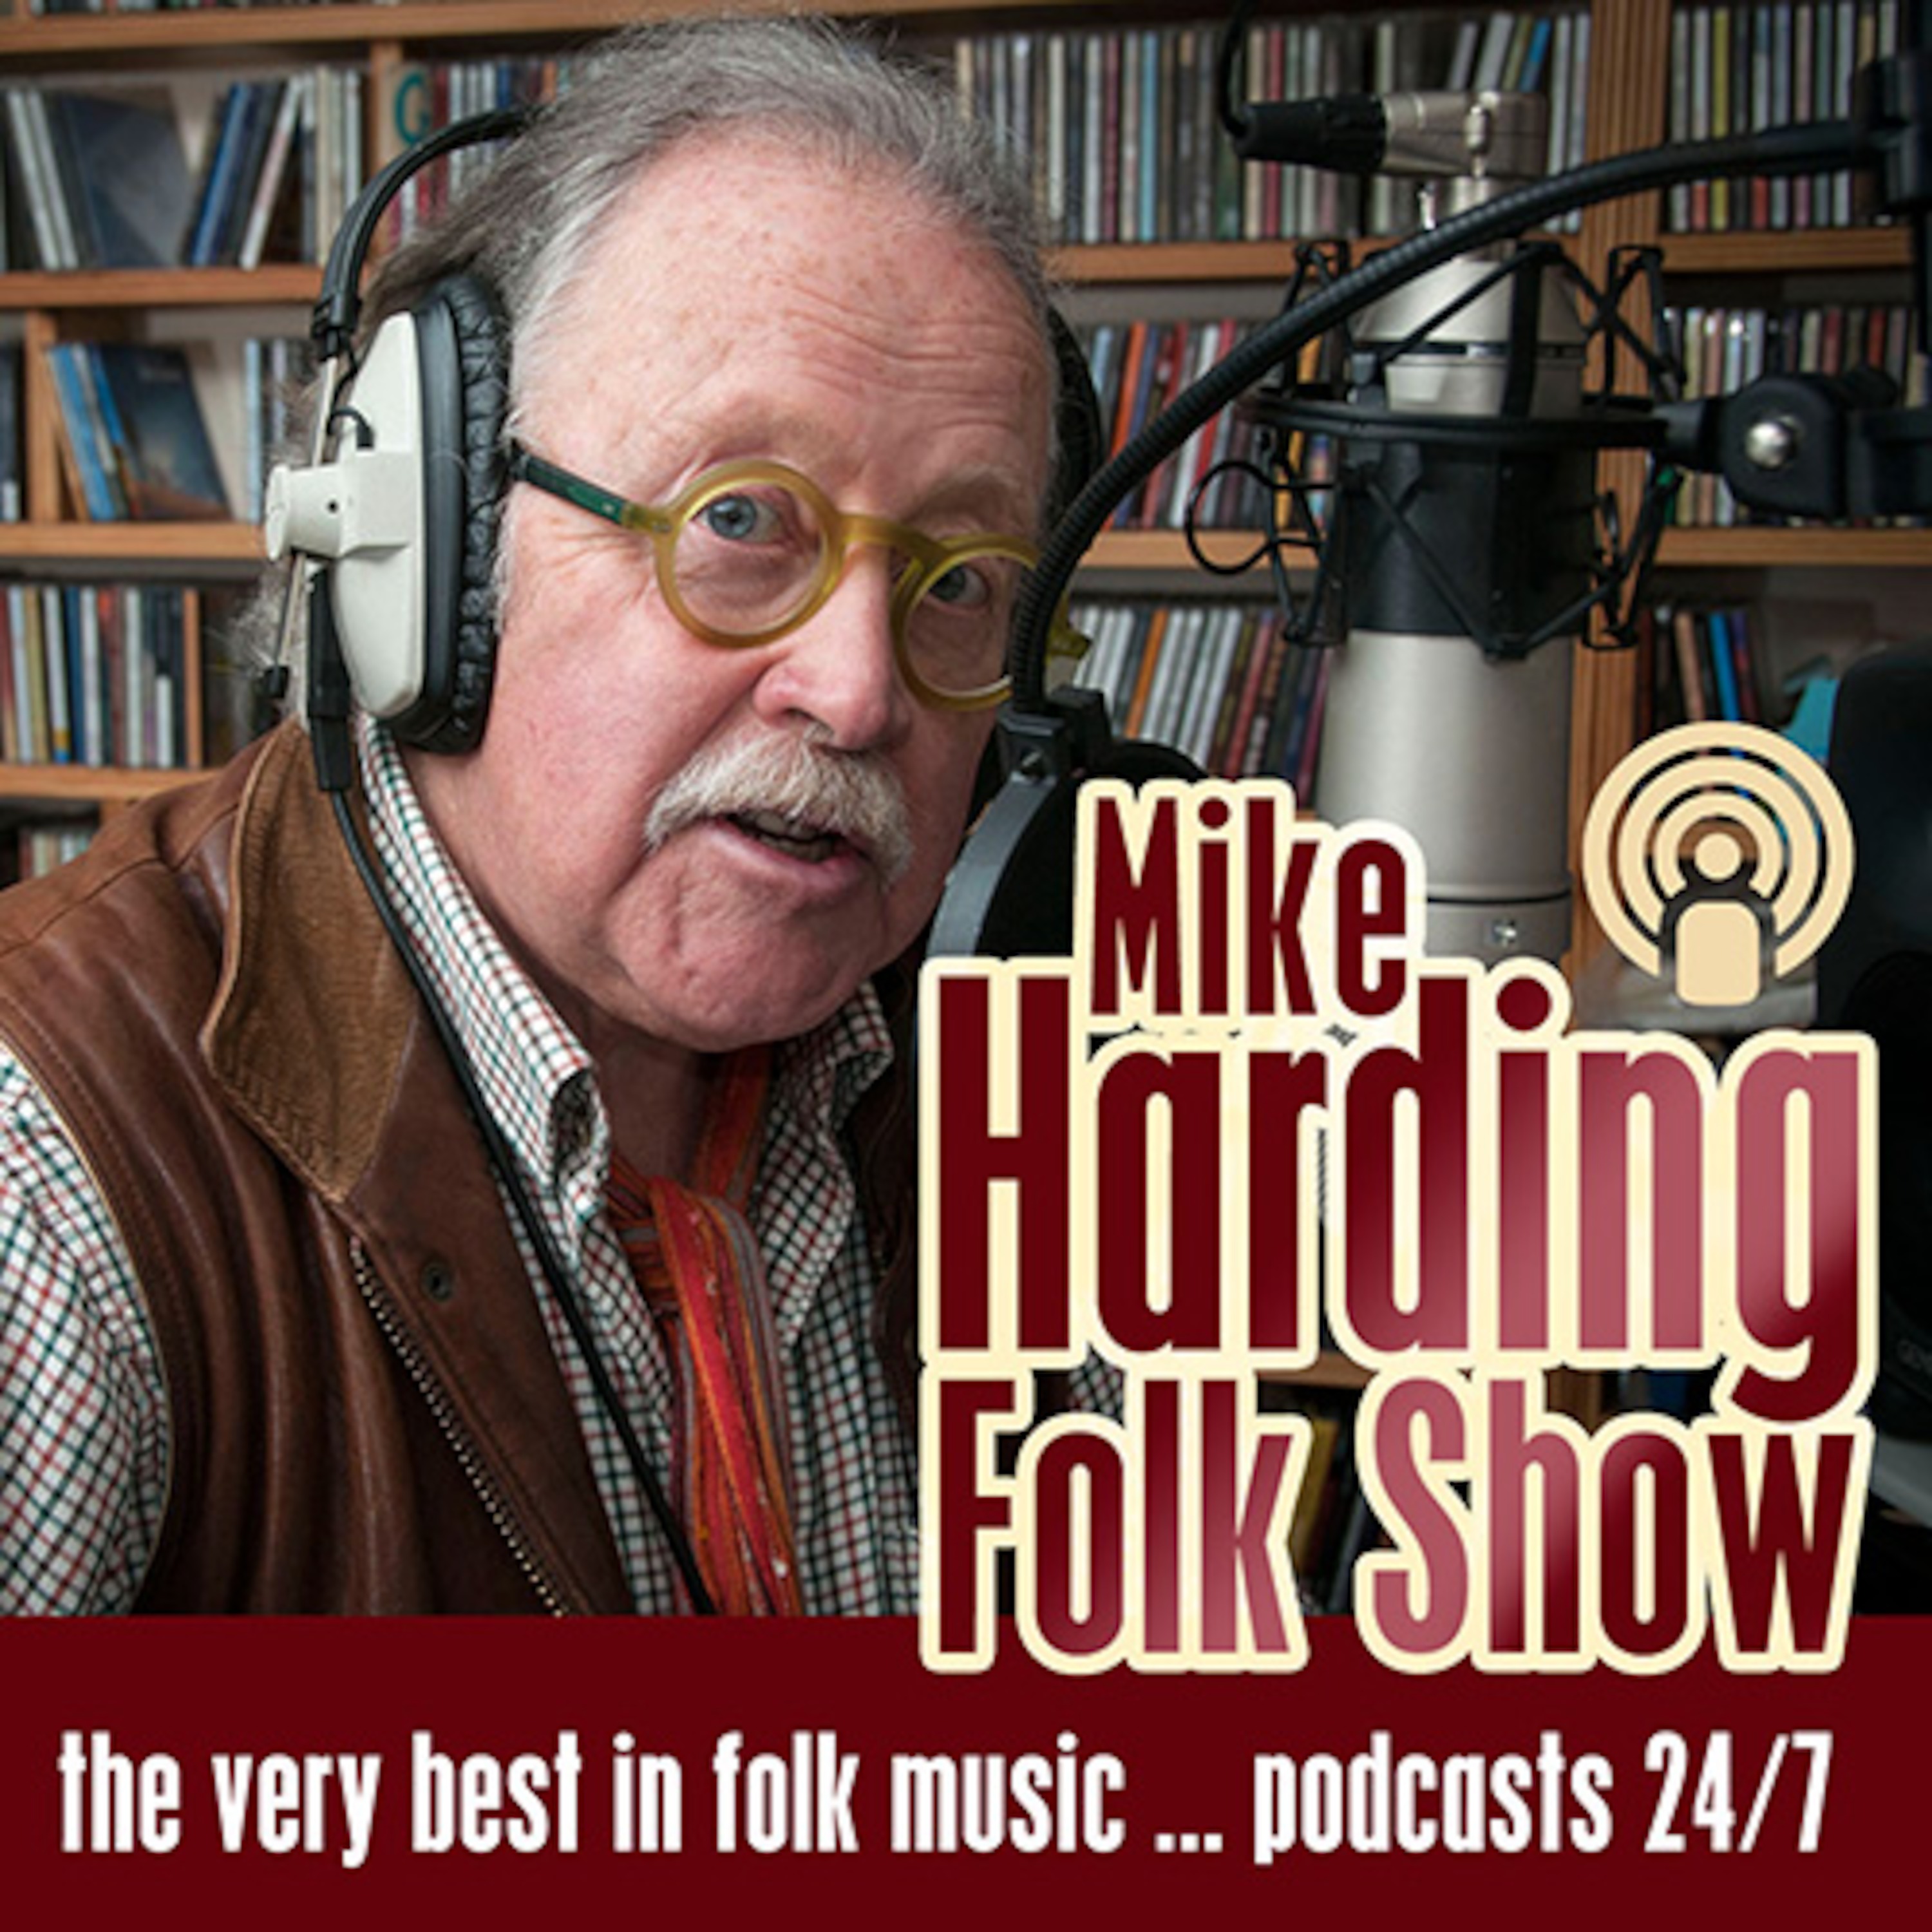 Mike Harding Folk Show 68